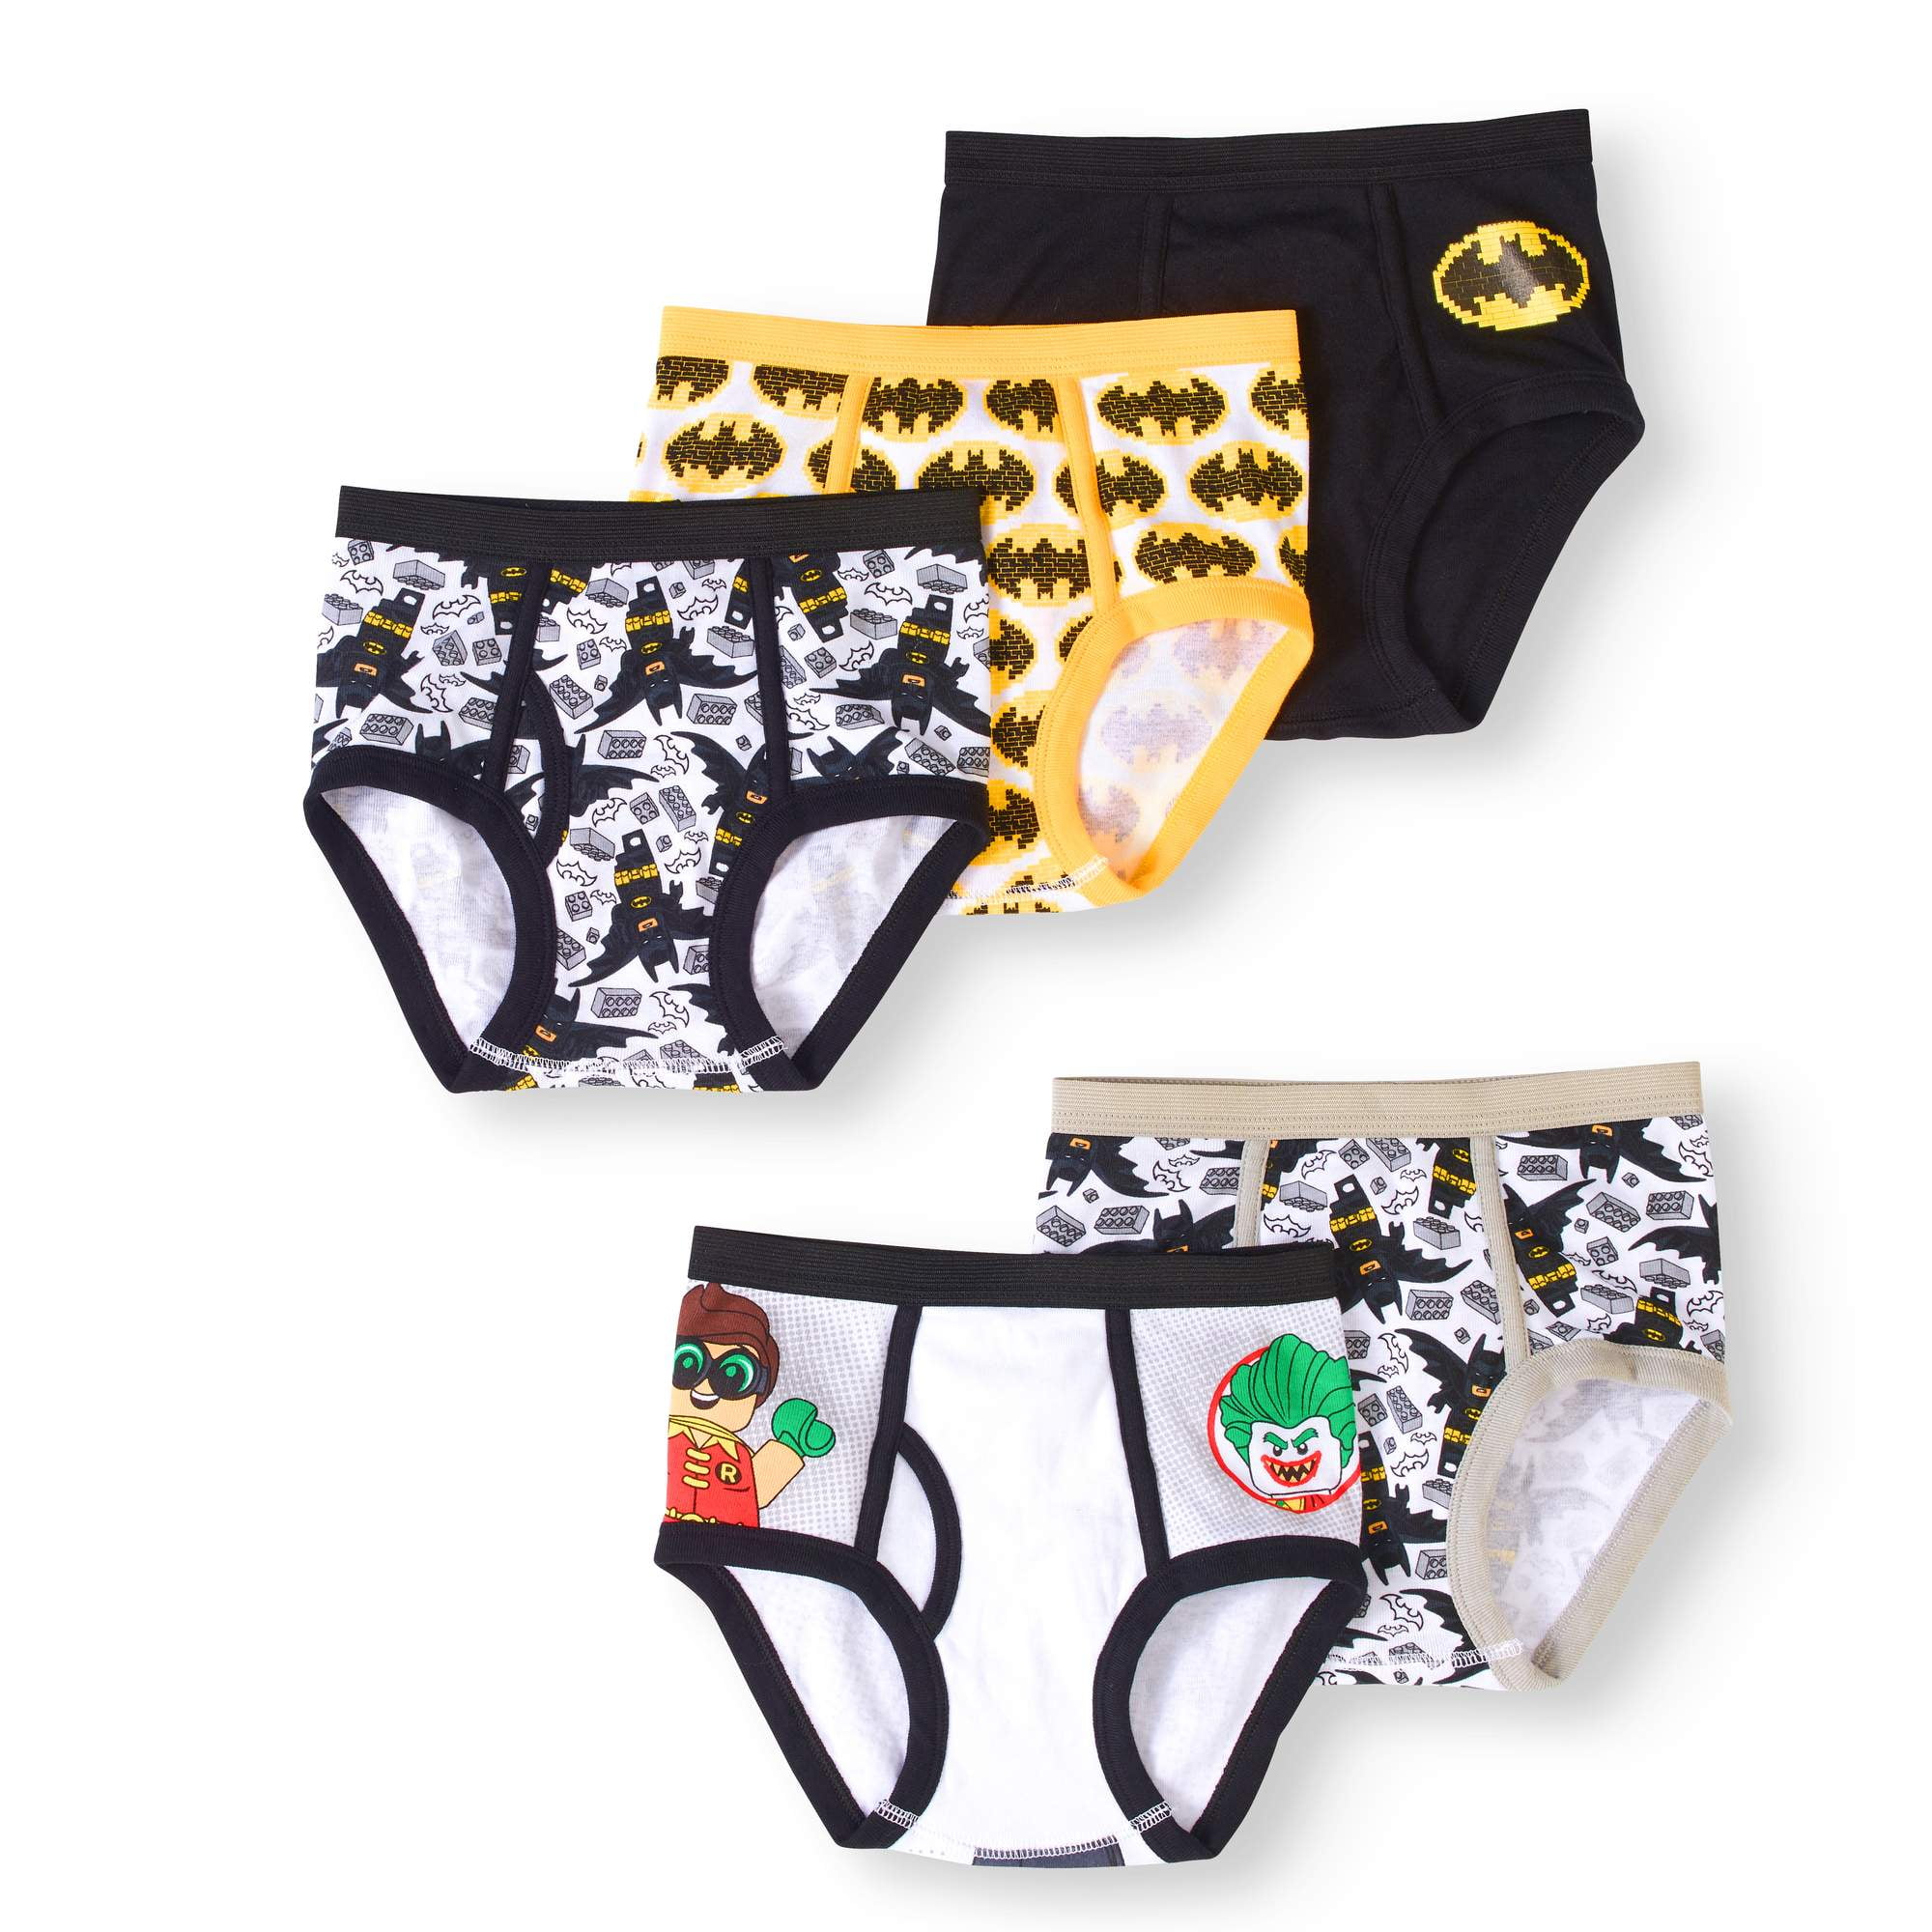 BRIEFS Batman Incredibles 2 PJ Masks Boys Size 4 Underwear Asst 5 packs Lego 